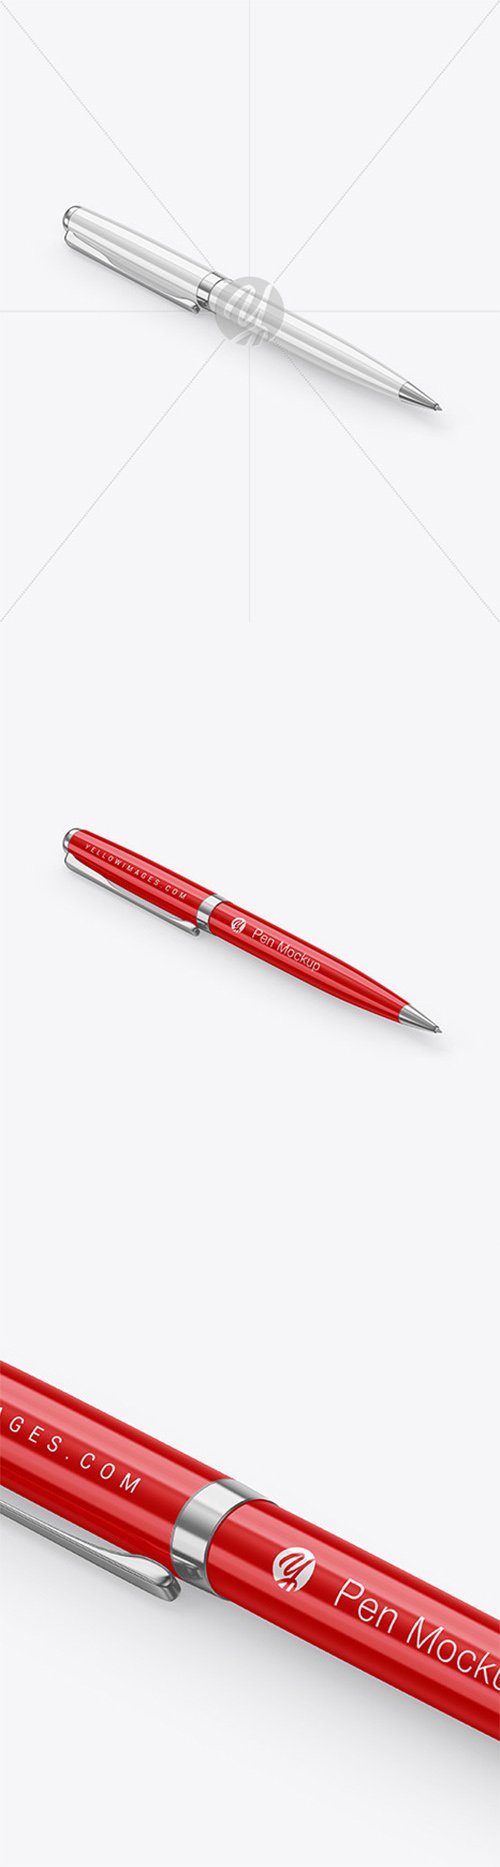 Glossy Pen w/ Metallic Finish Mockup 65922 TIF